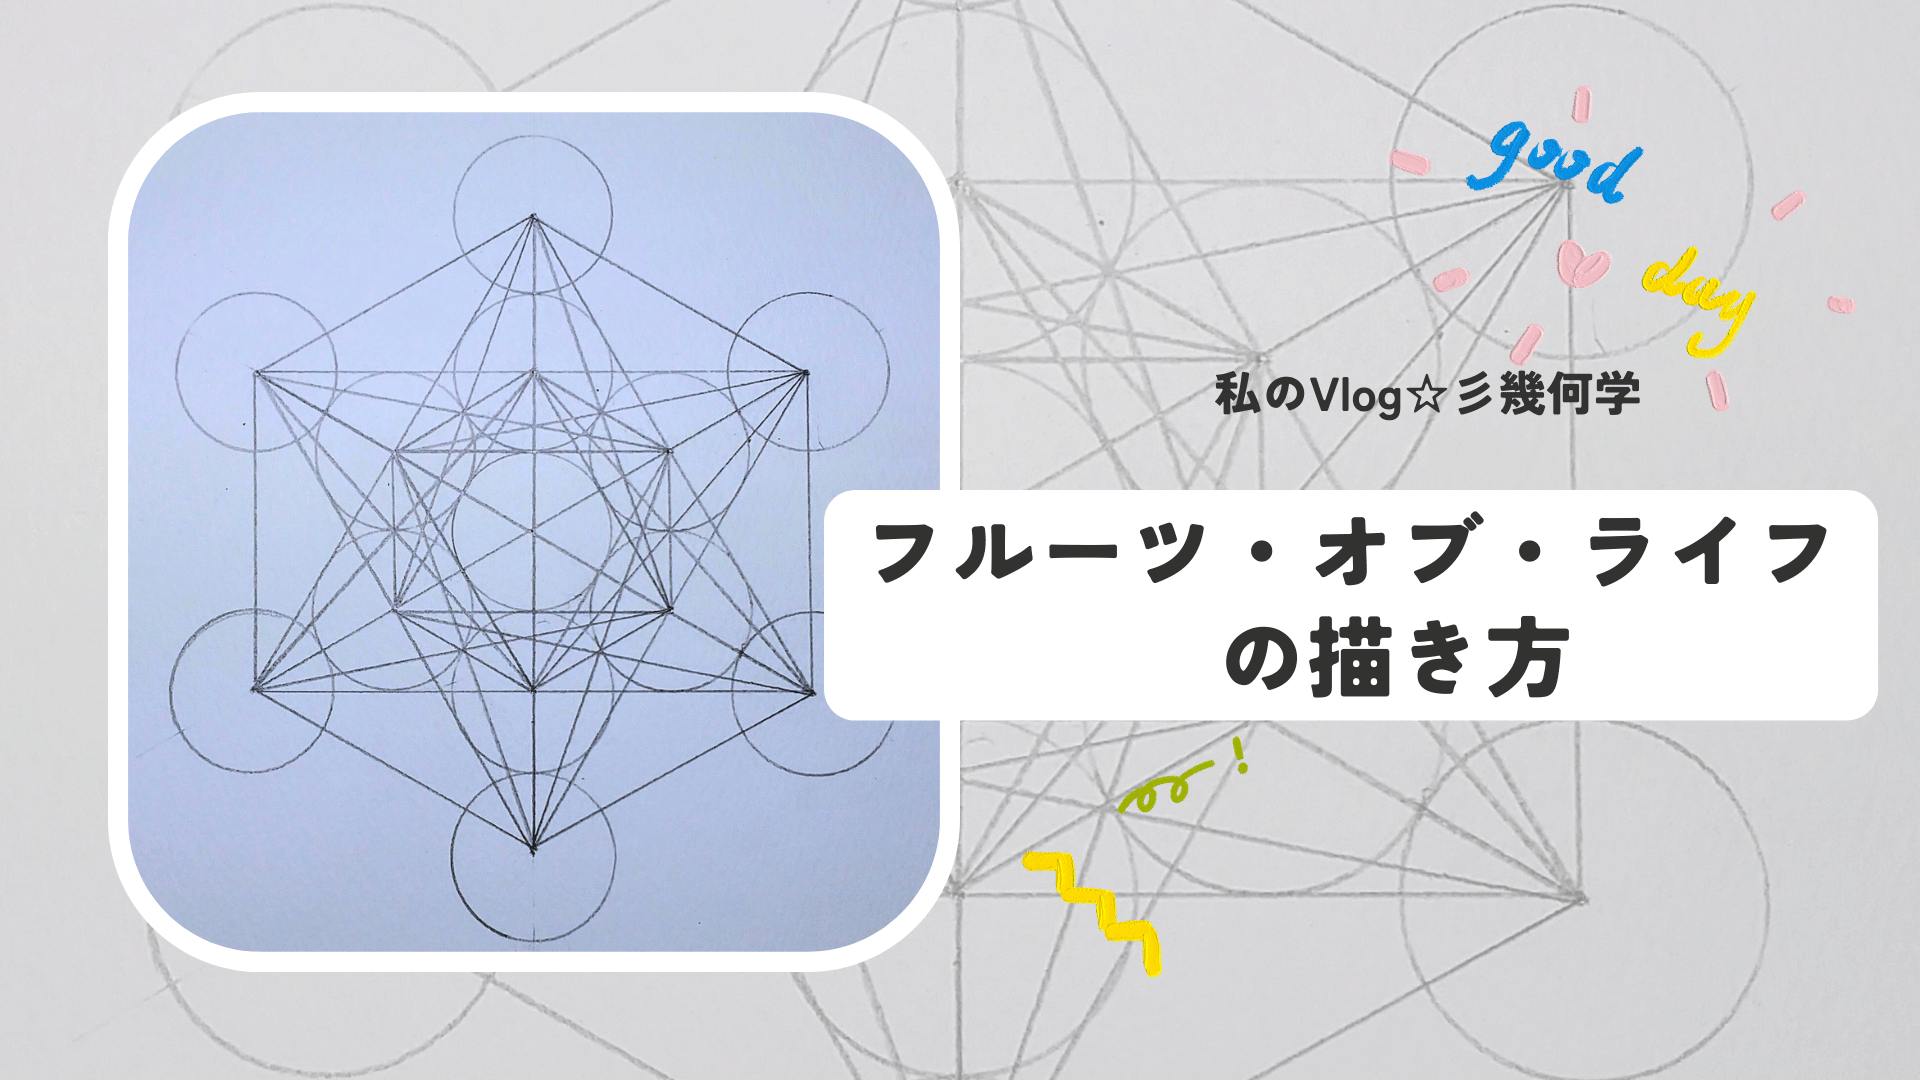 Volg☆彡コンパスでフルーツオブライフを描いています。神聖幾何学模様のfruit of life描き方。How to draw sacred geometry patterns.